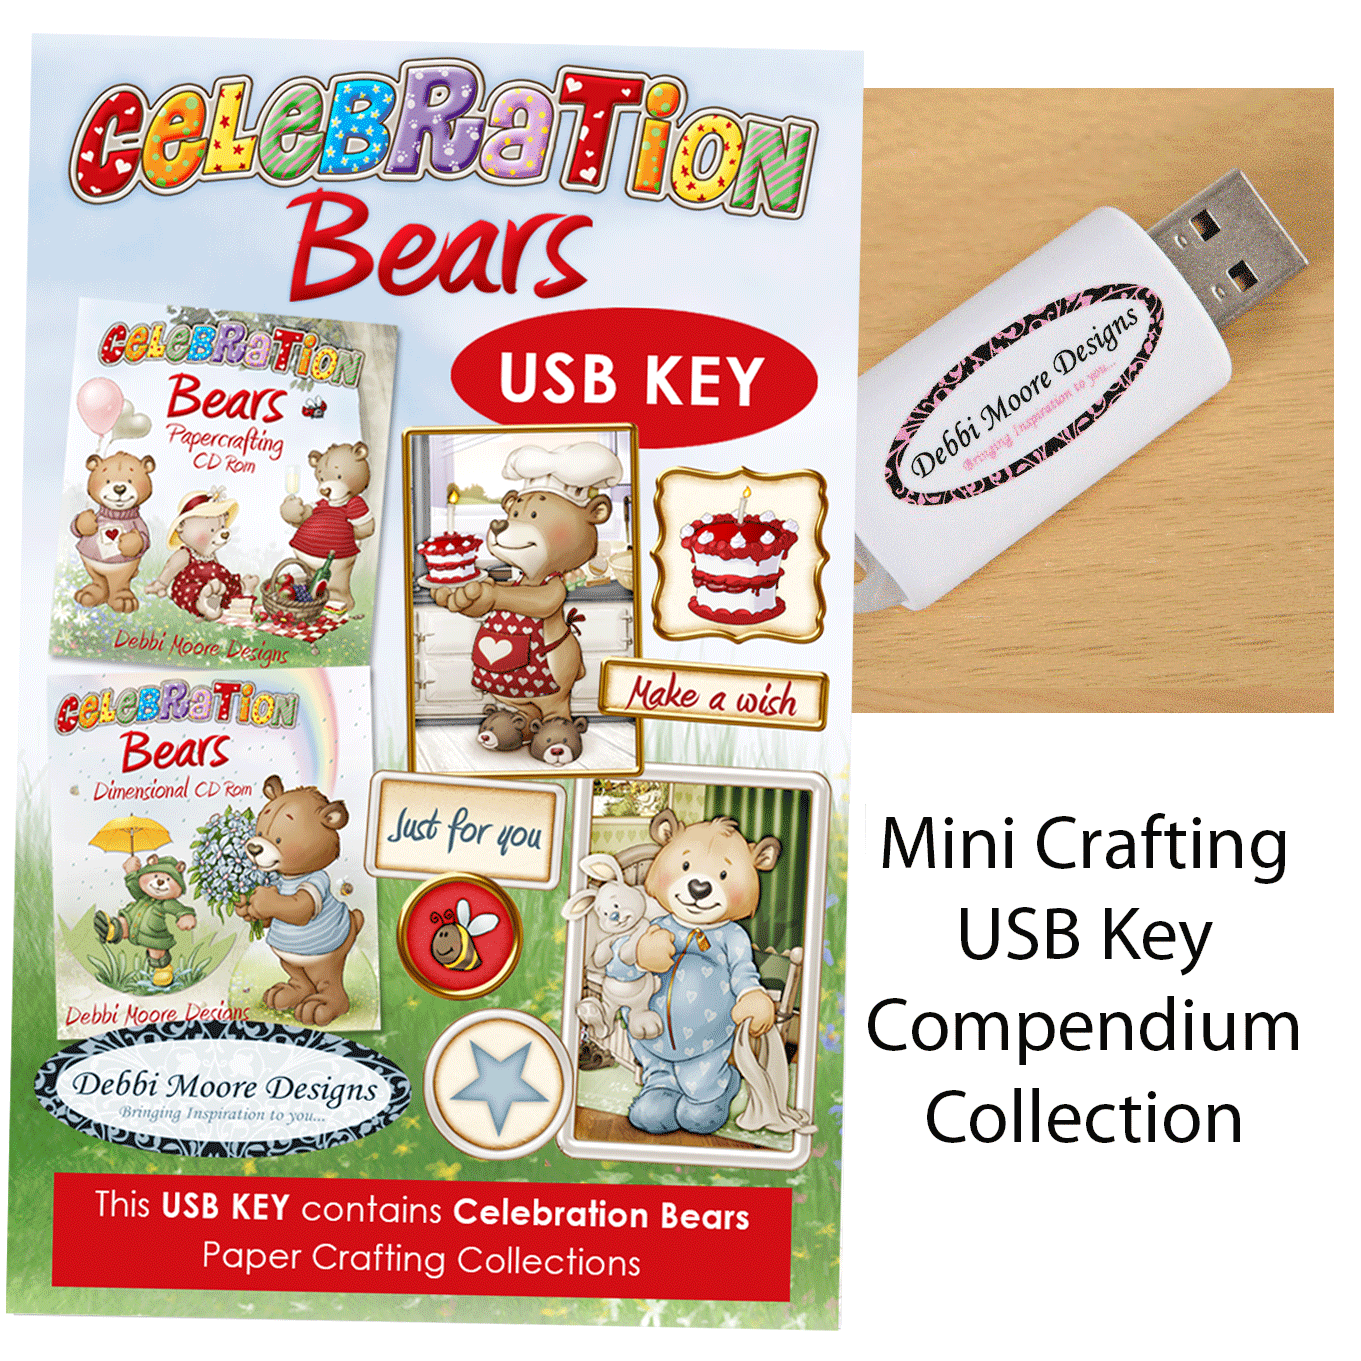 [DMUSB047] Celebration Bears Crafting Compendium USB Key Collection